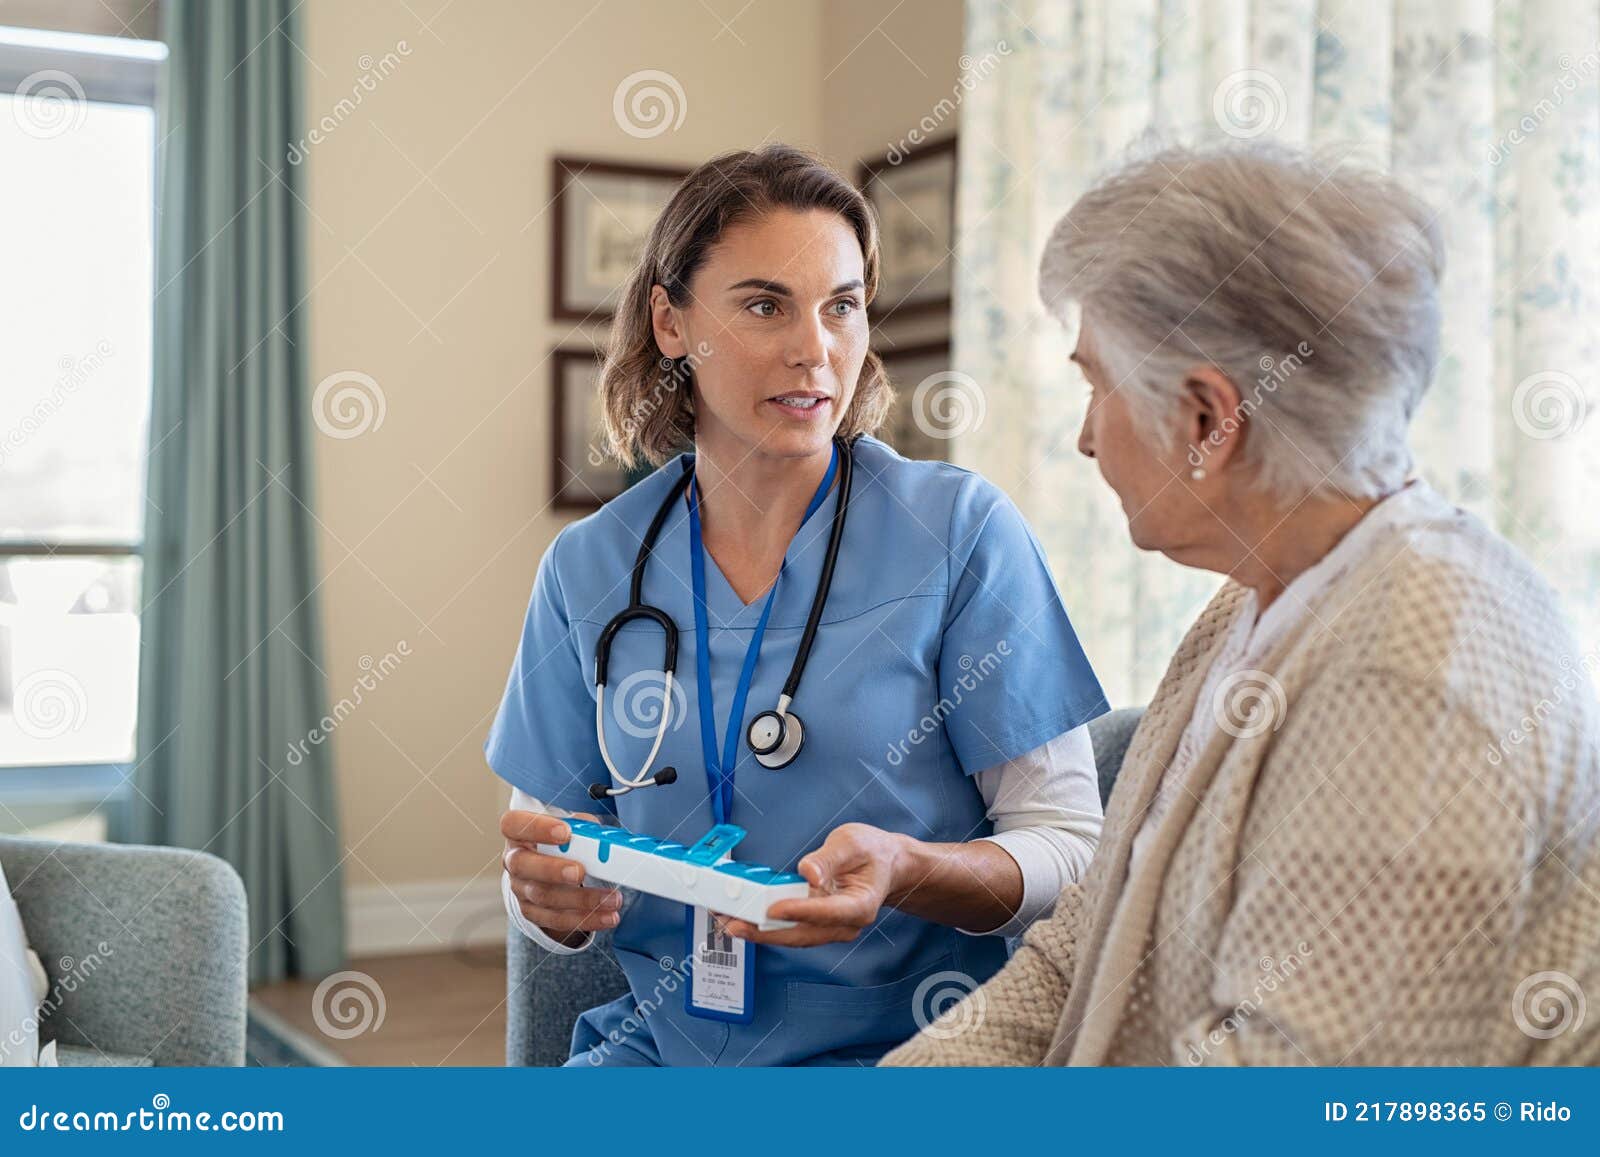 nurse explaining medicine dosage to senior woman at nursing home